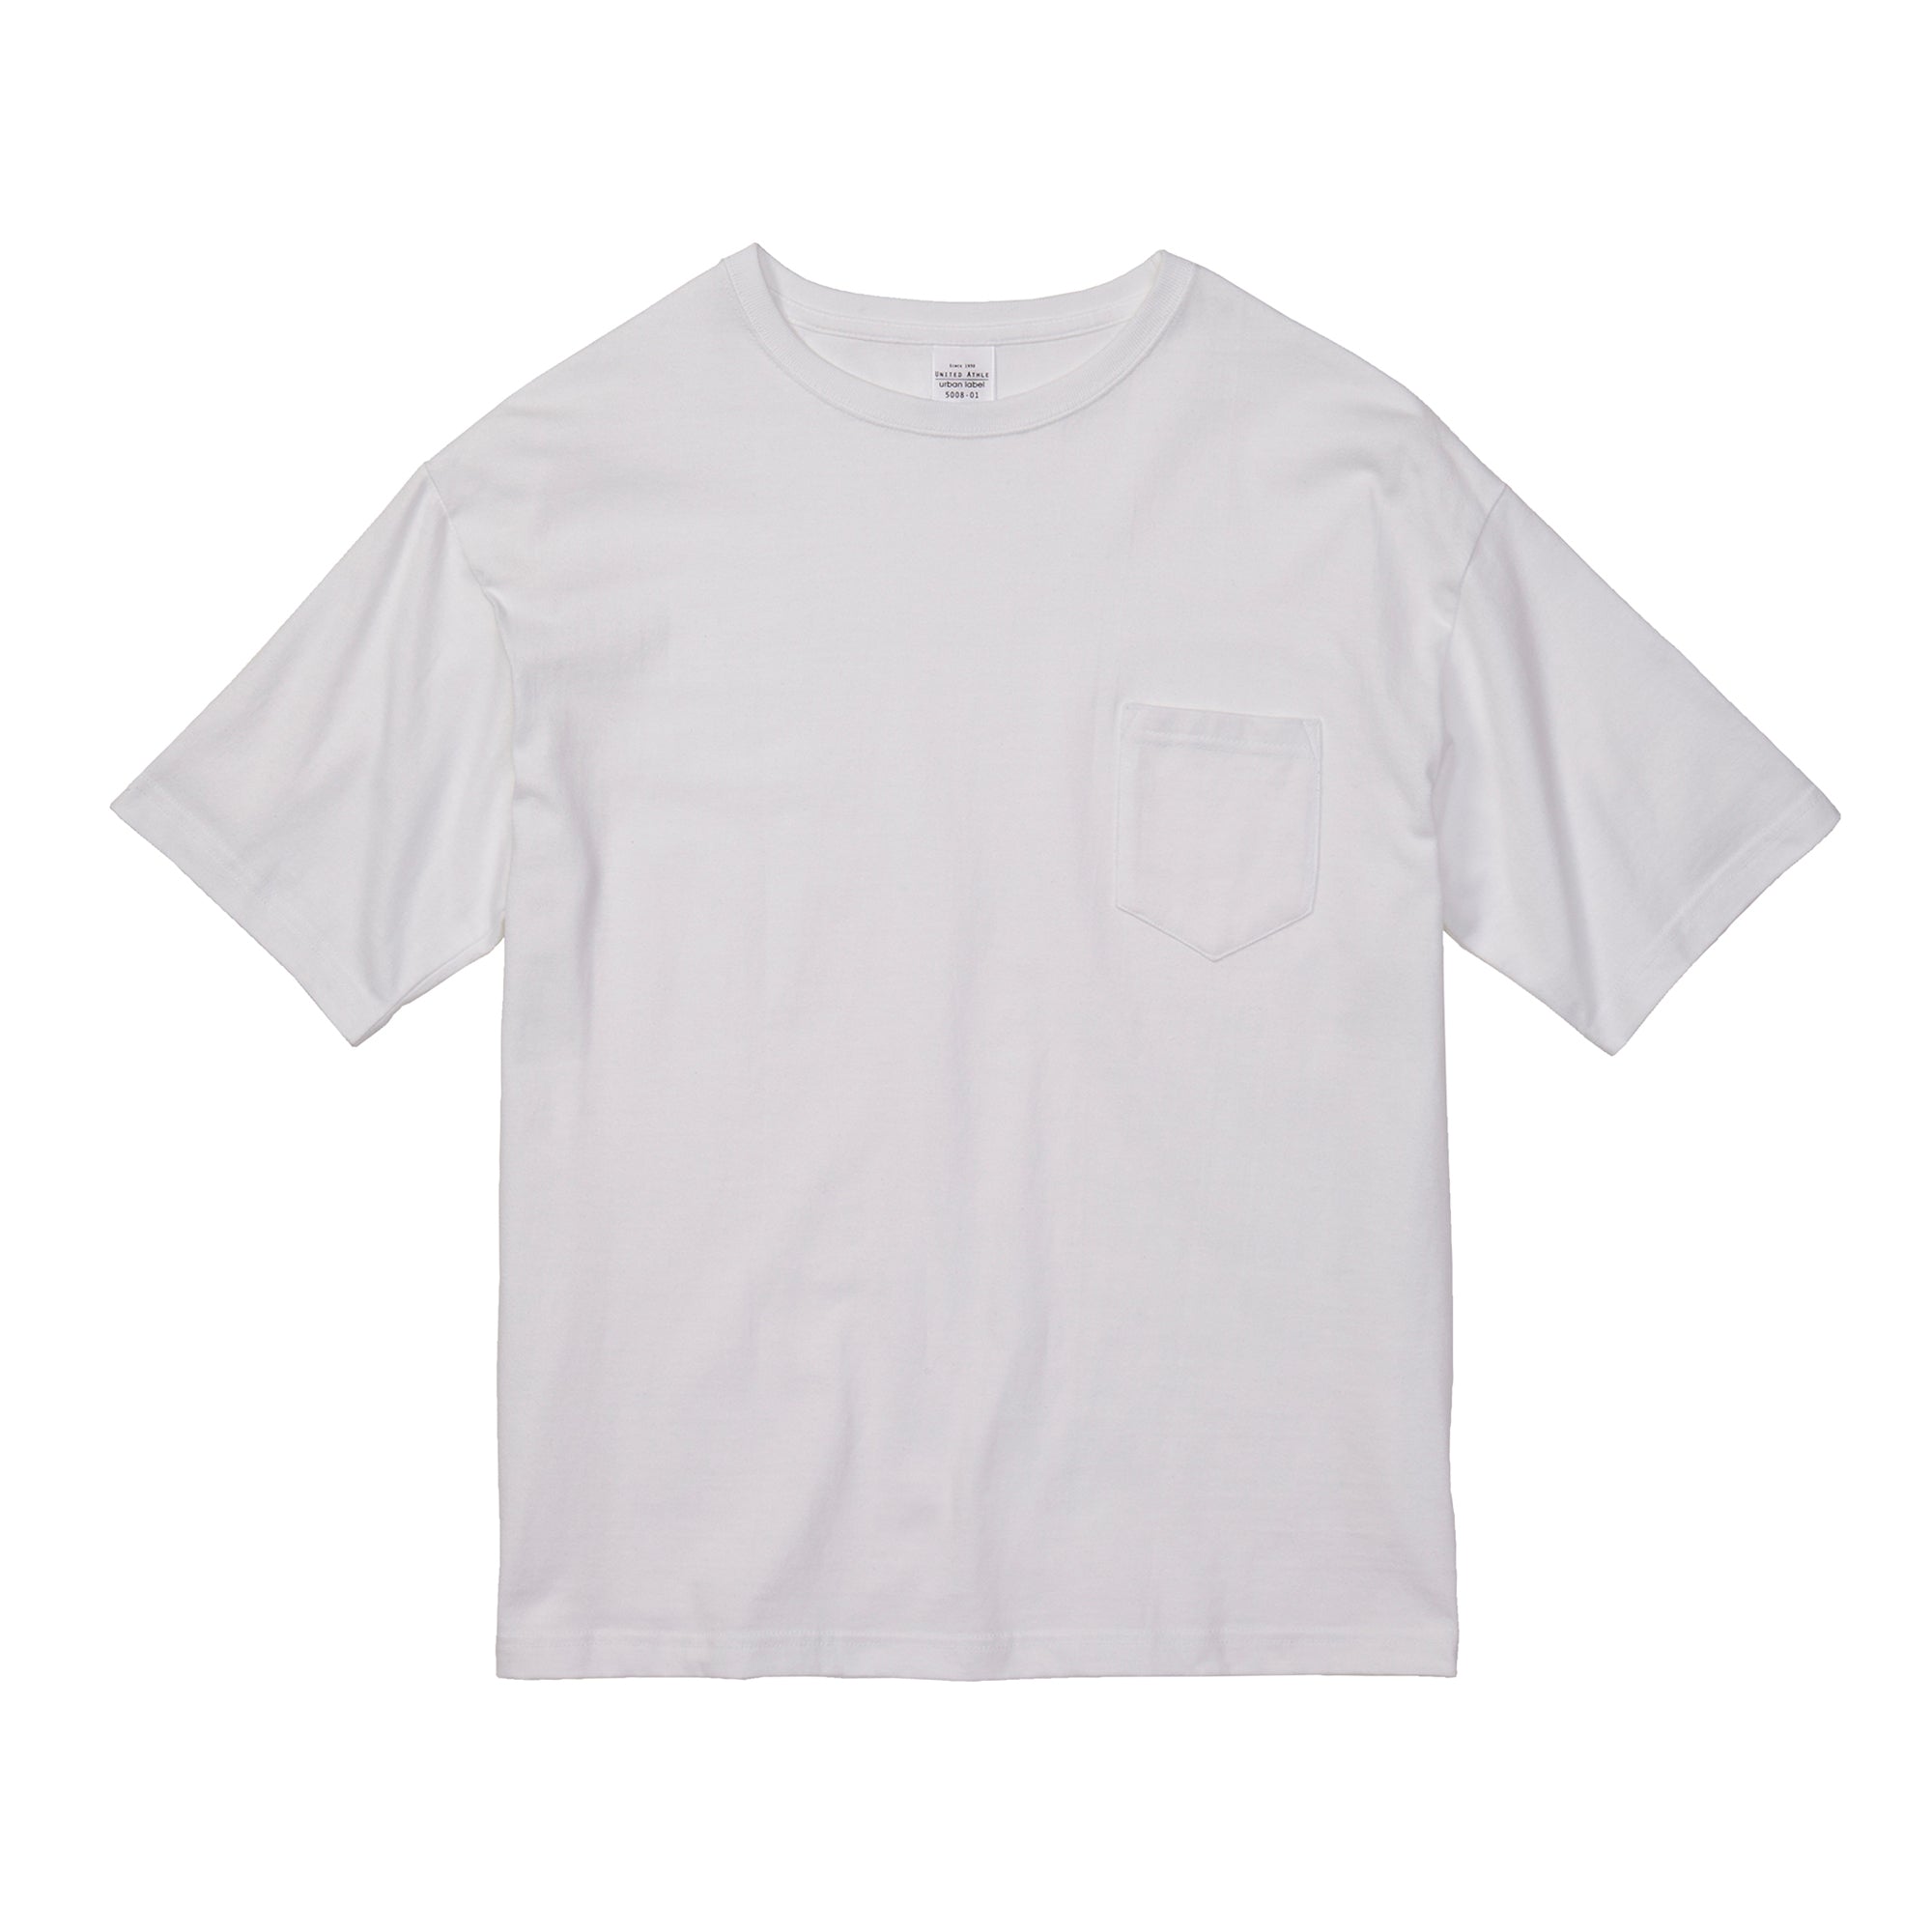 5008 - 5.6oz Big Silhouette T-shirt (with pocket) - White x 1